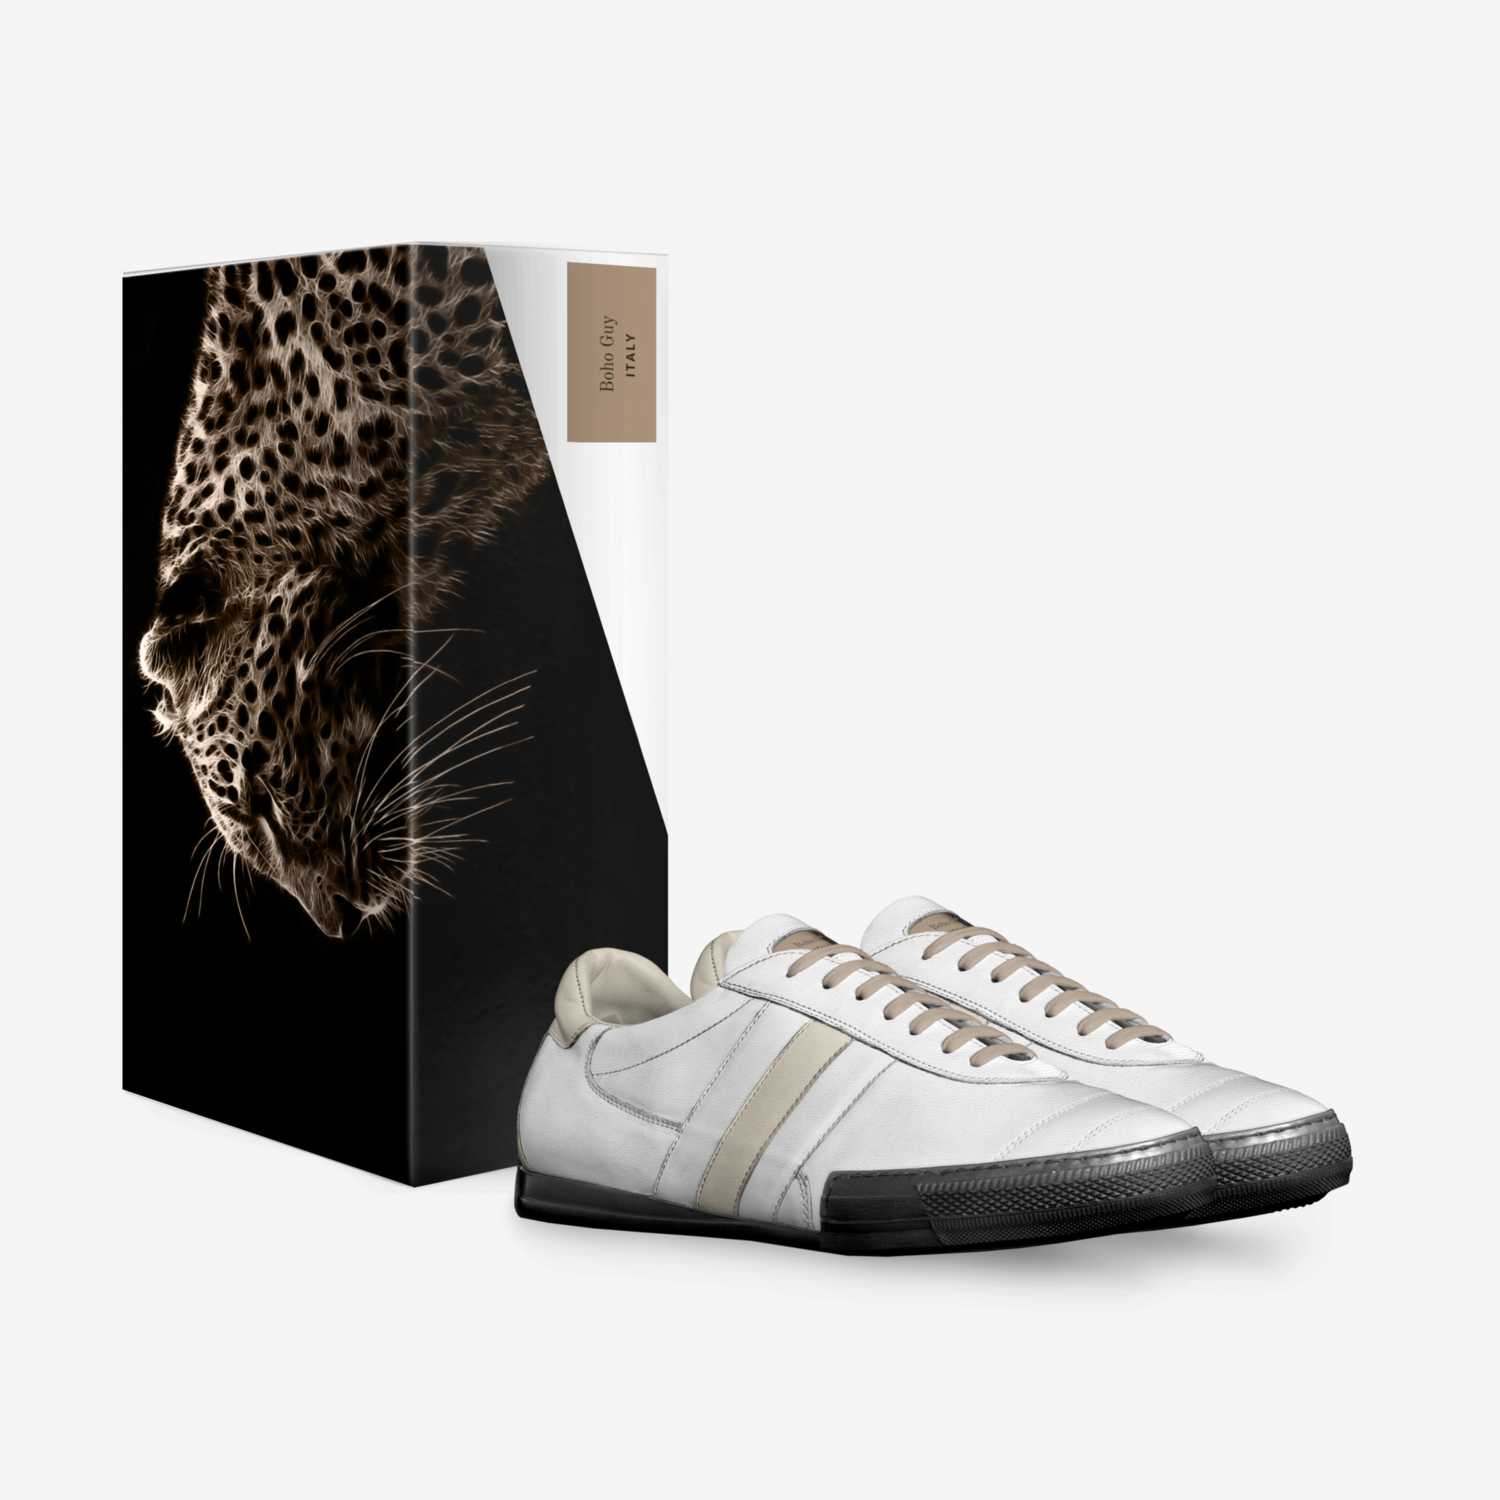 Boho Guy custom made in Italy shoes by Marijke Verkerk Design | Box view